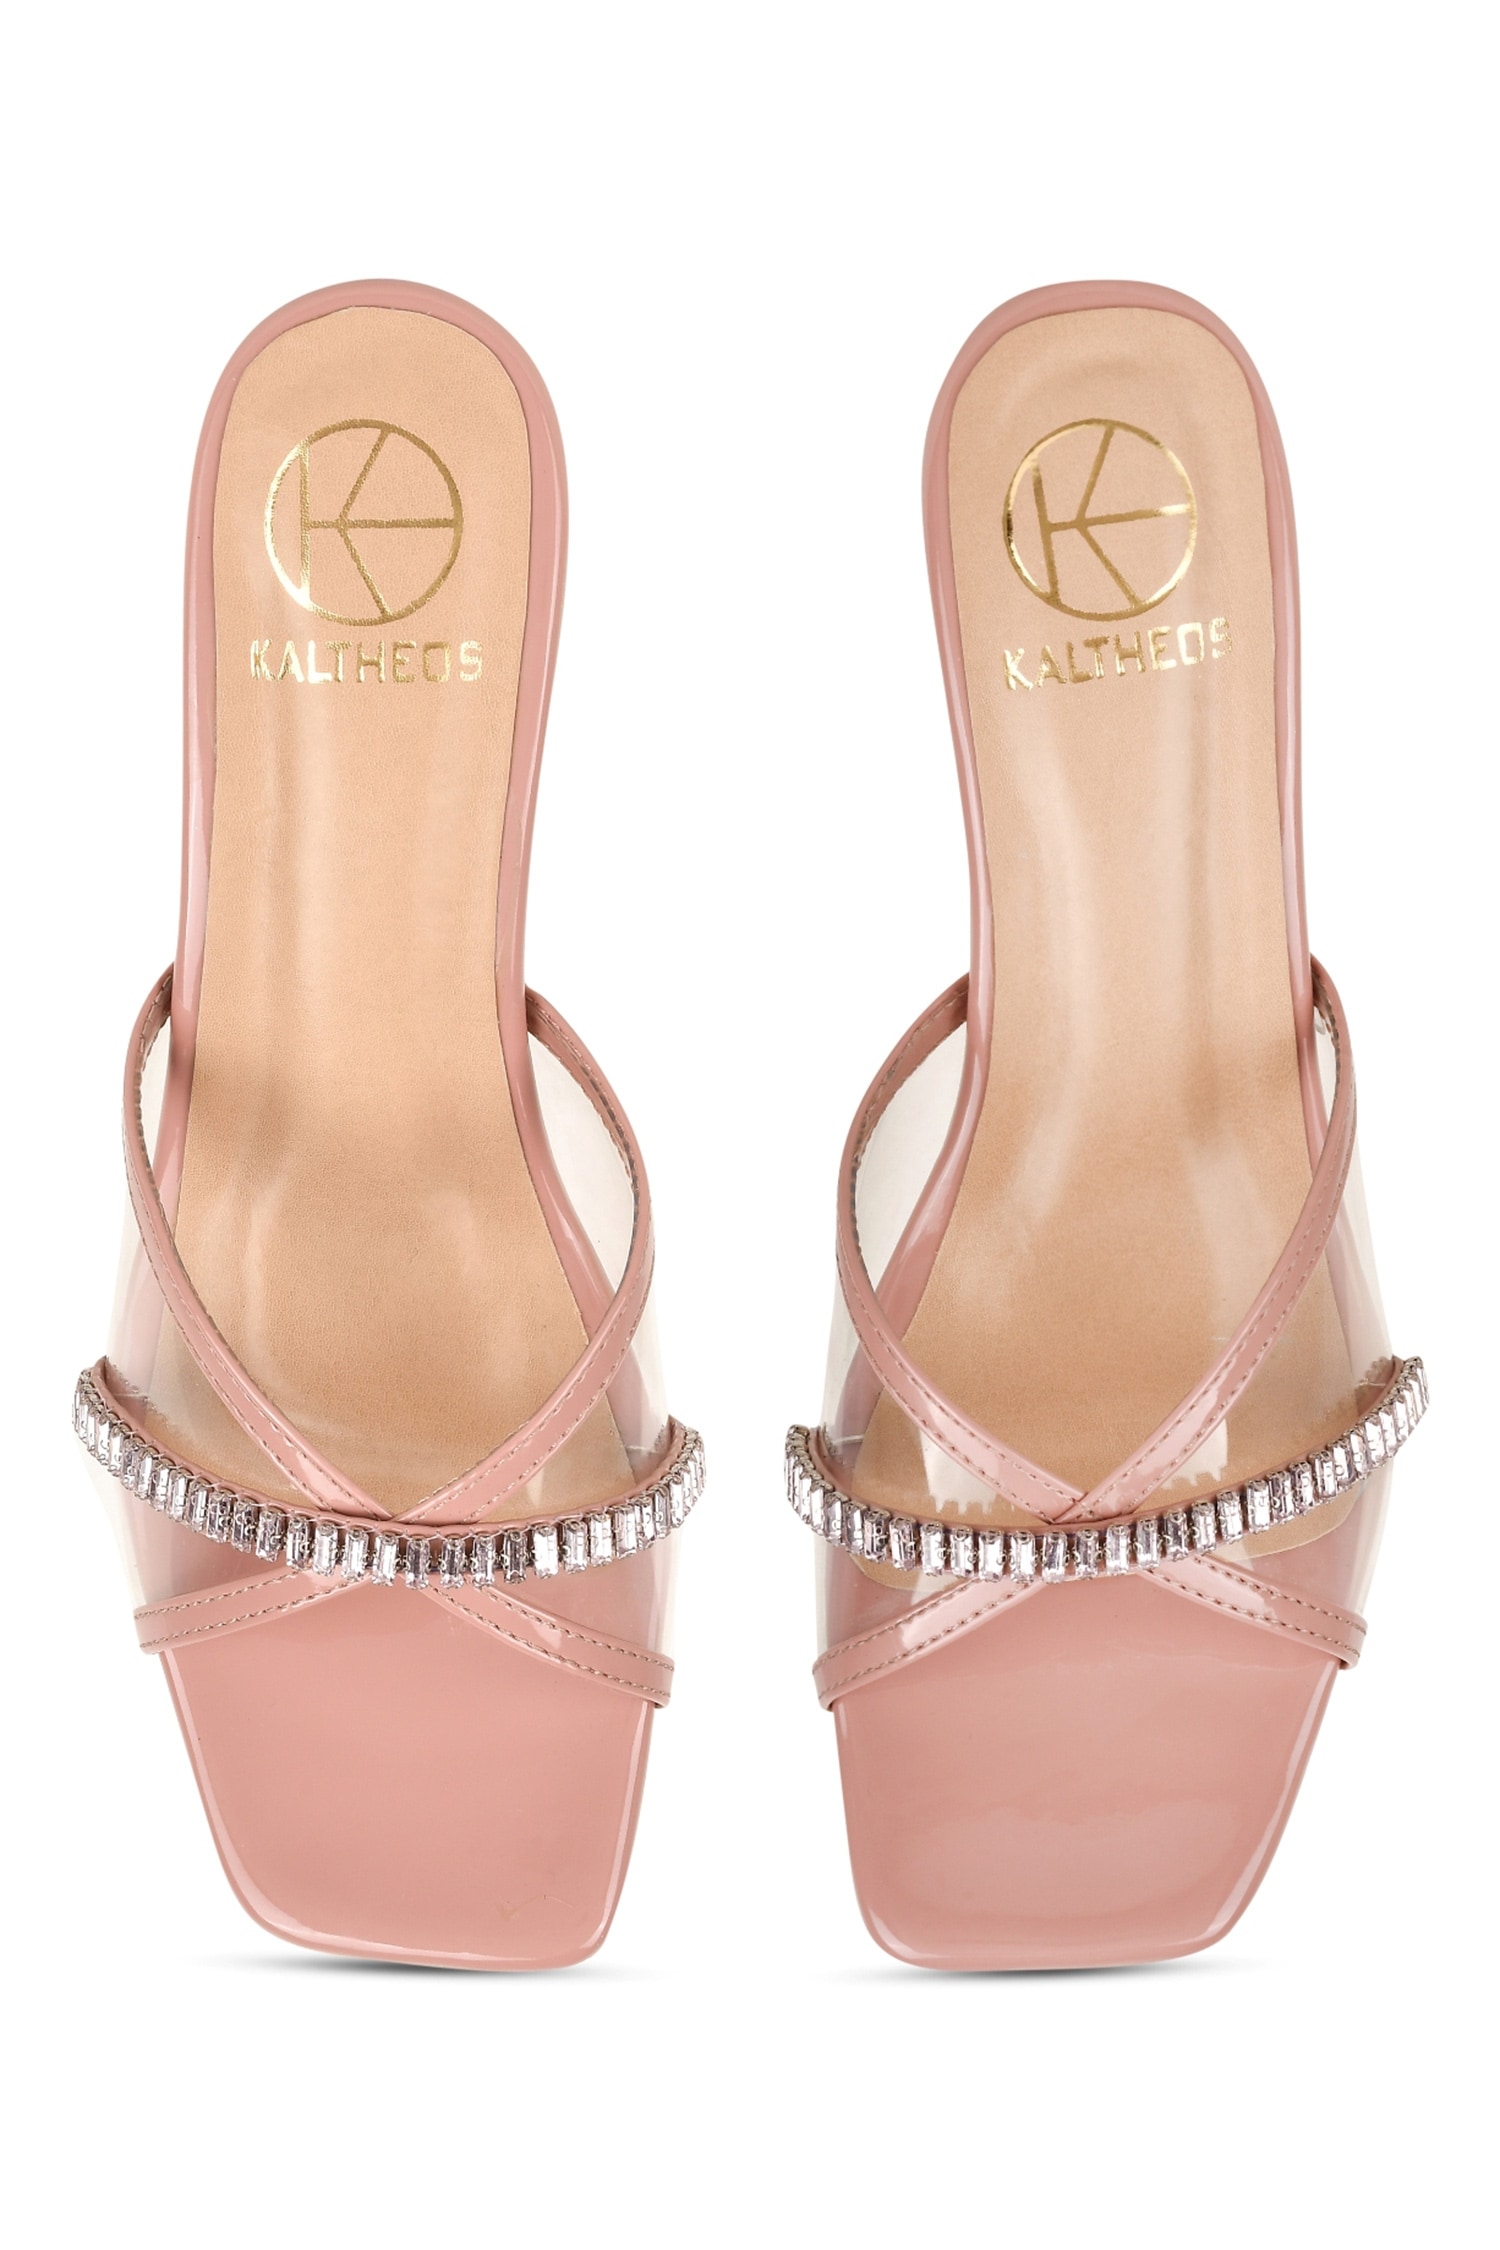 Kaltheos - Peach Embellished Helen Square Toe Transparent Heels